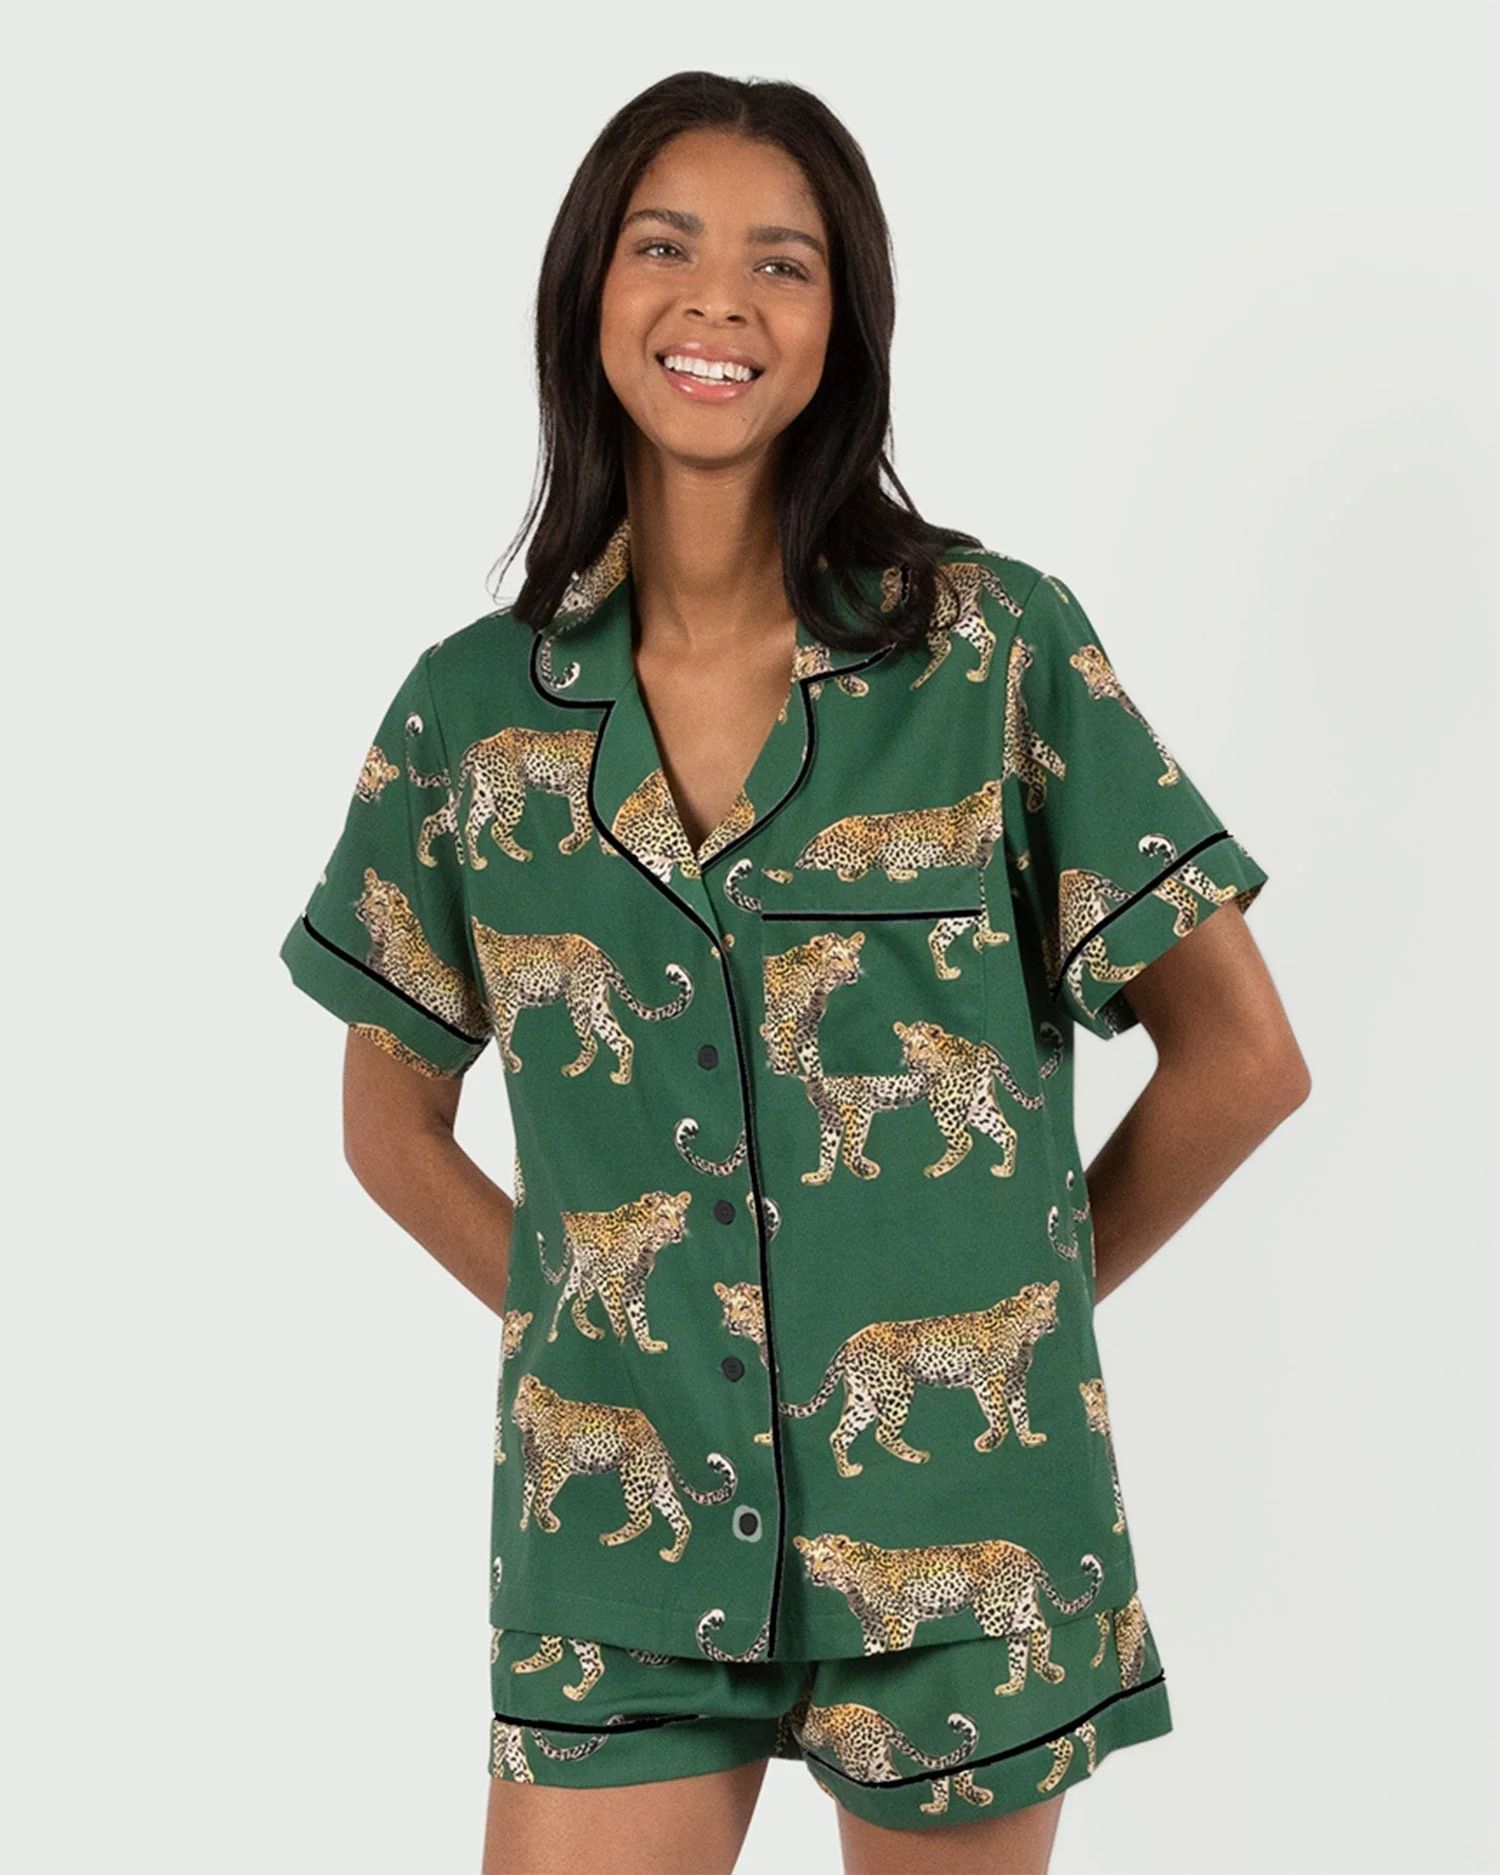 Green Cheetah Pajama Set -  Katie Kime | Colorful Prints, Wallpaper, Pajamas, Home Decor, & More | Katie Kime Inc